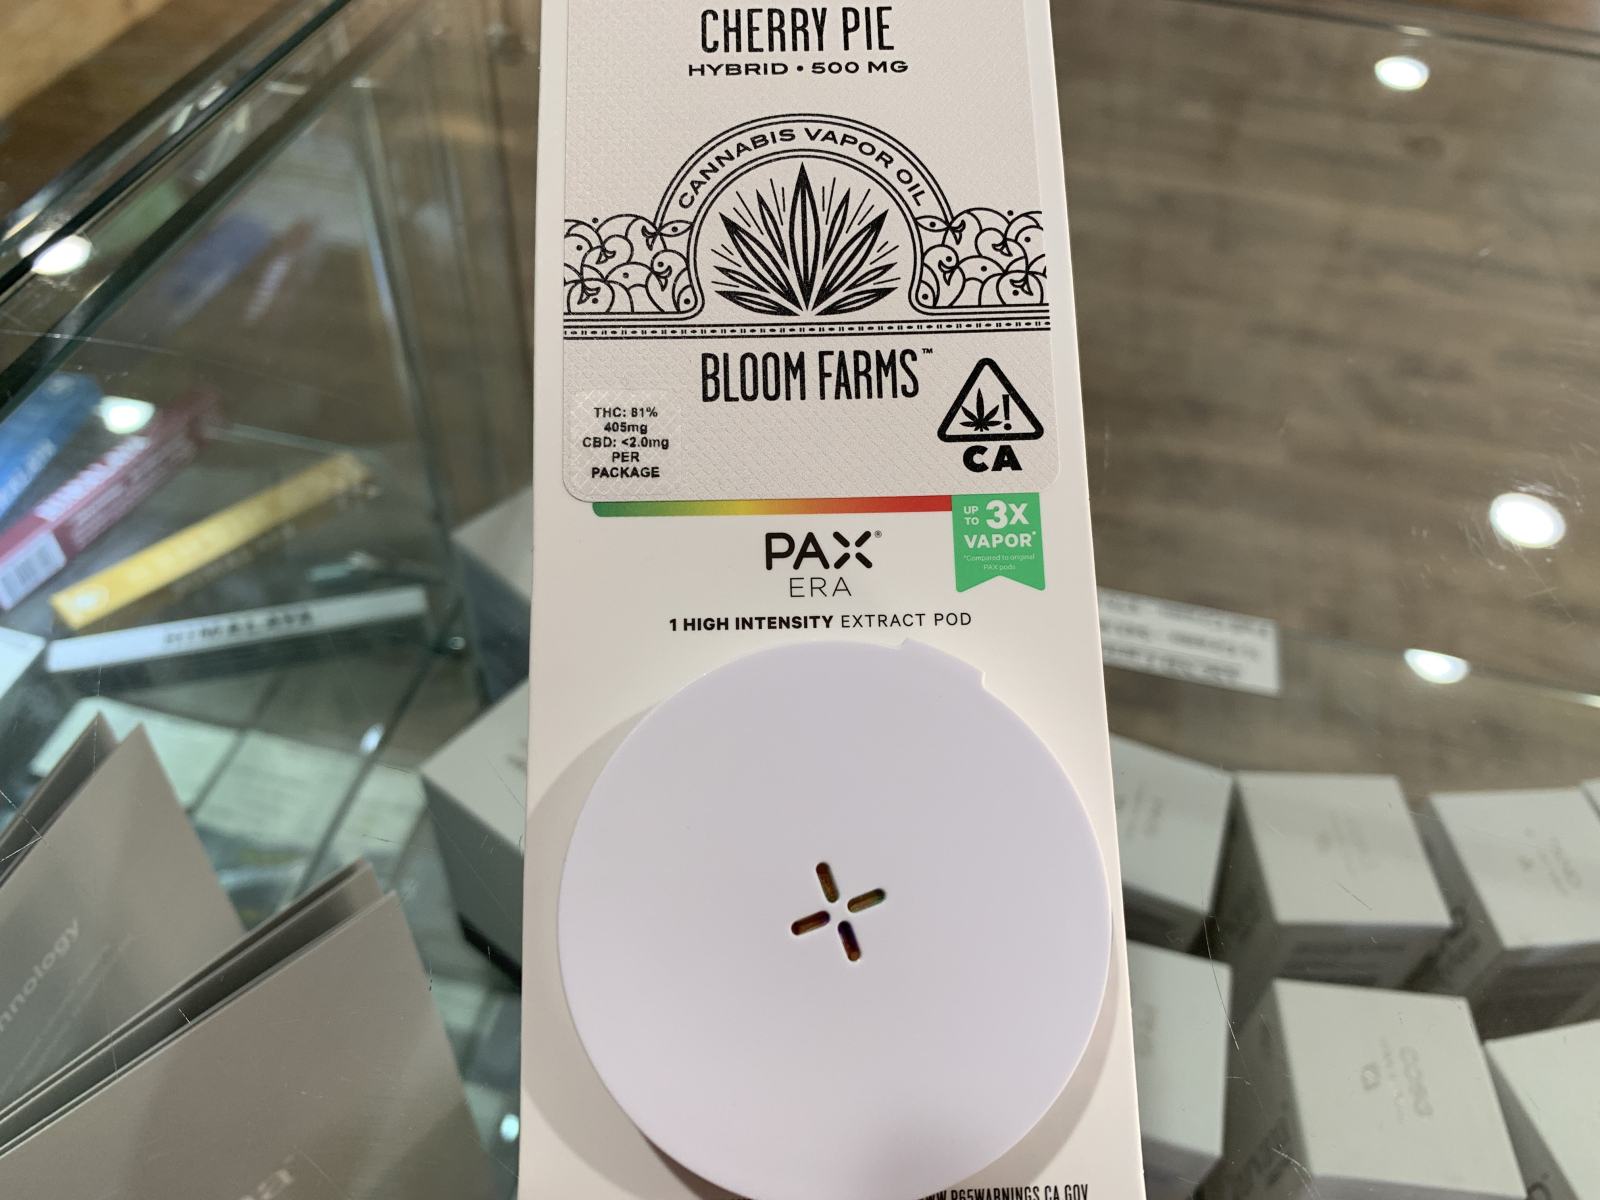 Bloomfarms cherry pie pax pod